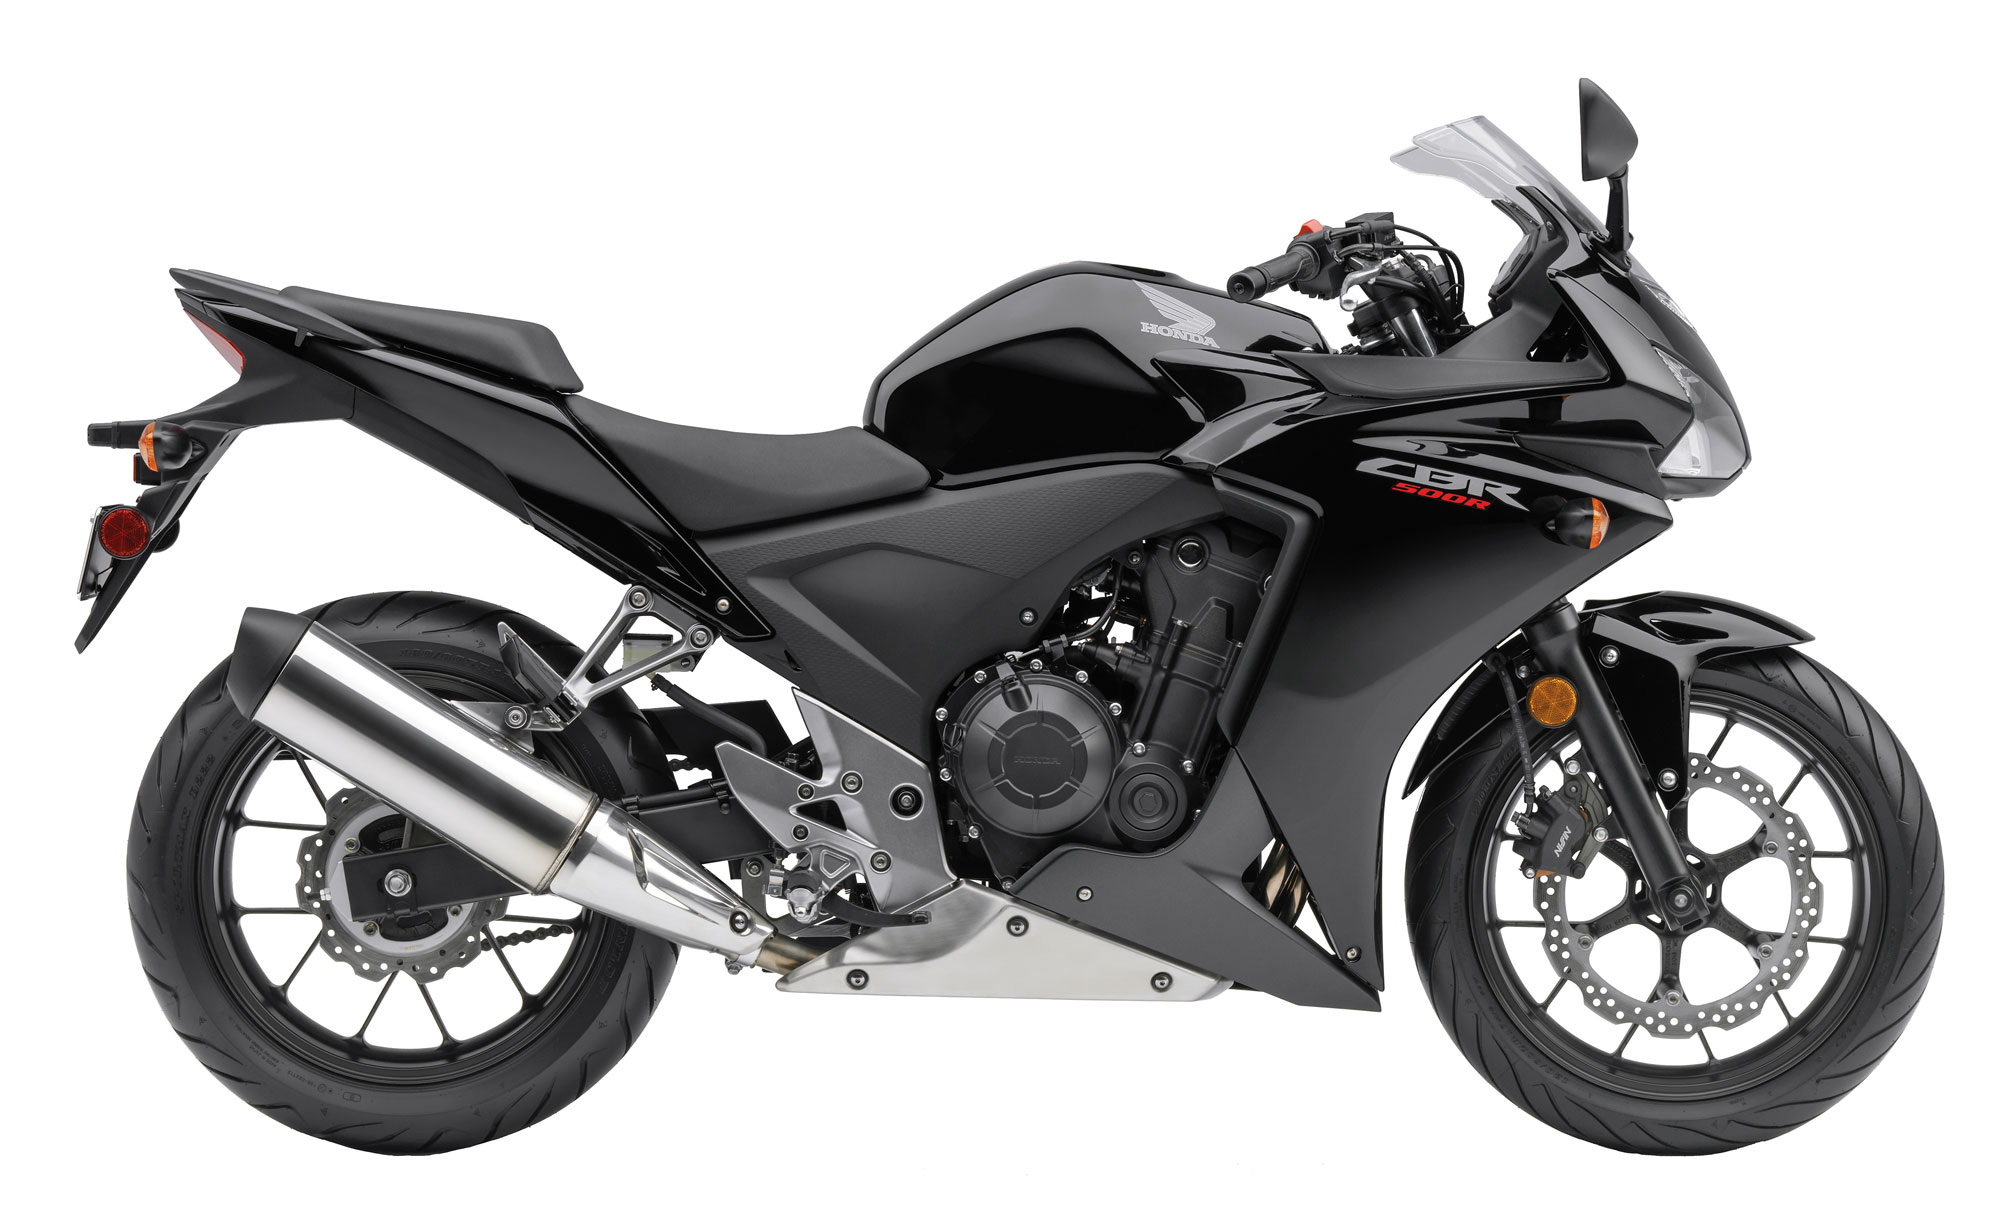 http://www.totalmotorcycle.com/motorcycles/2013models/2013-Honda-CBR500R3.jpg